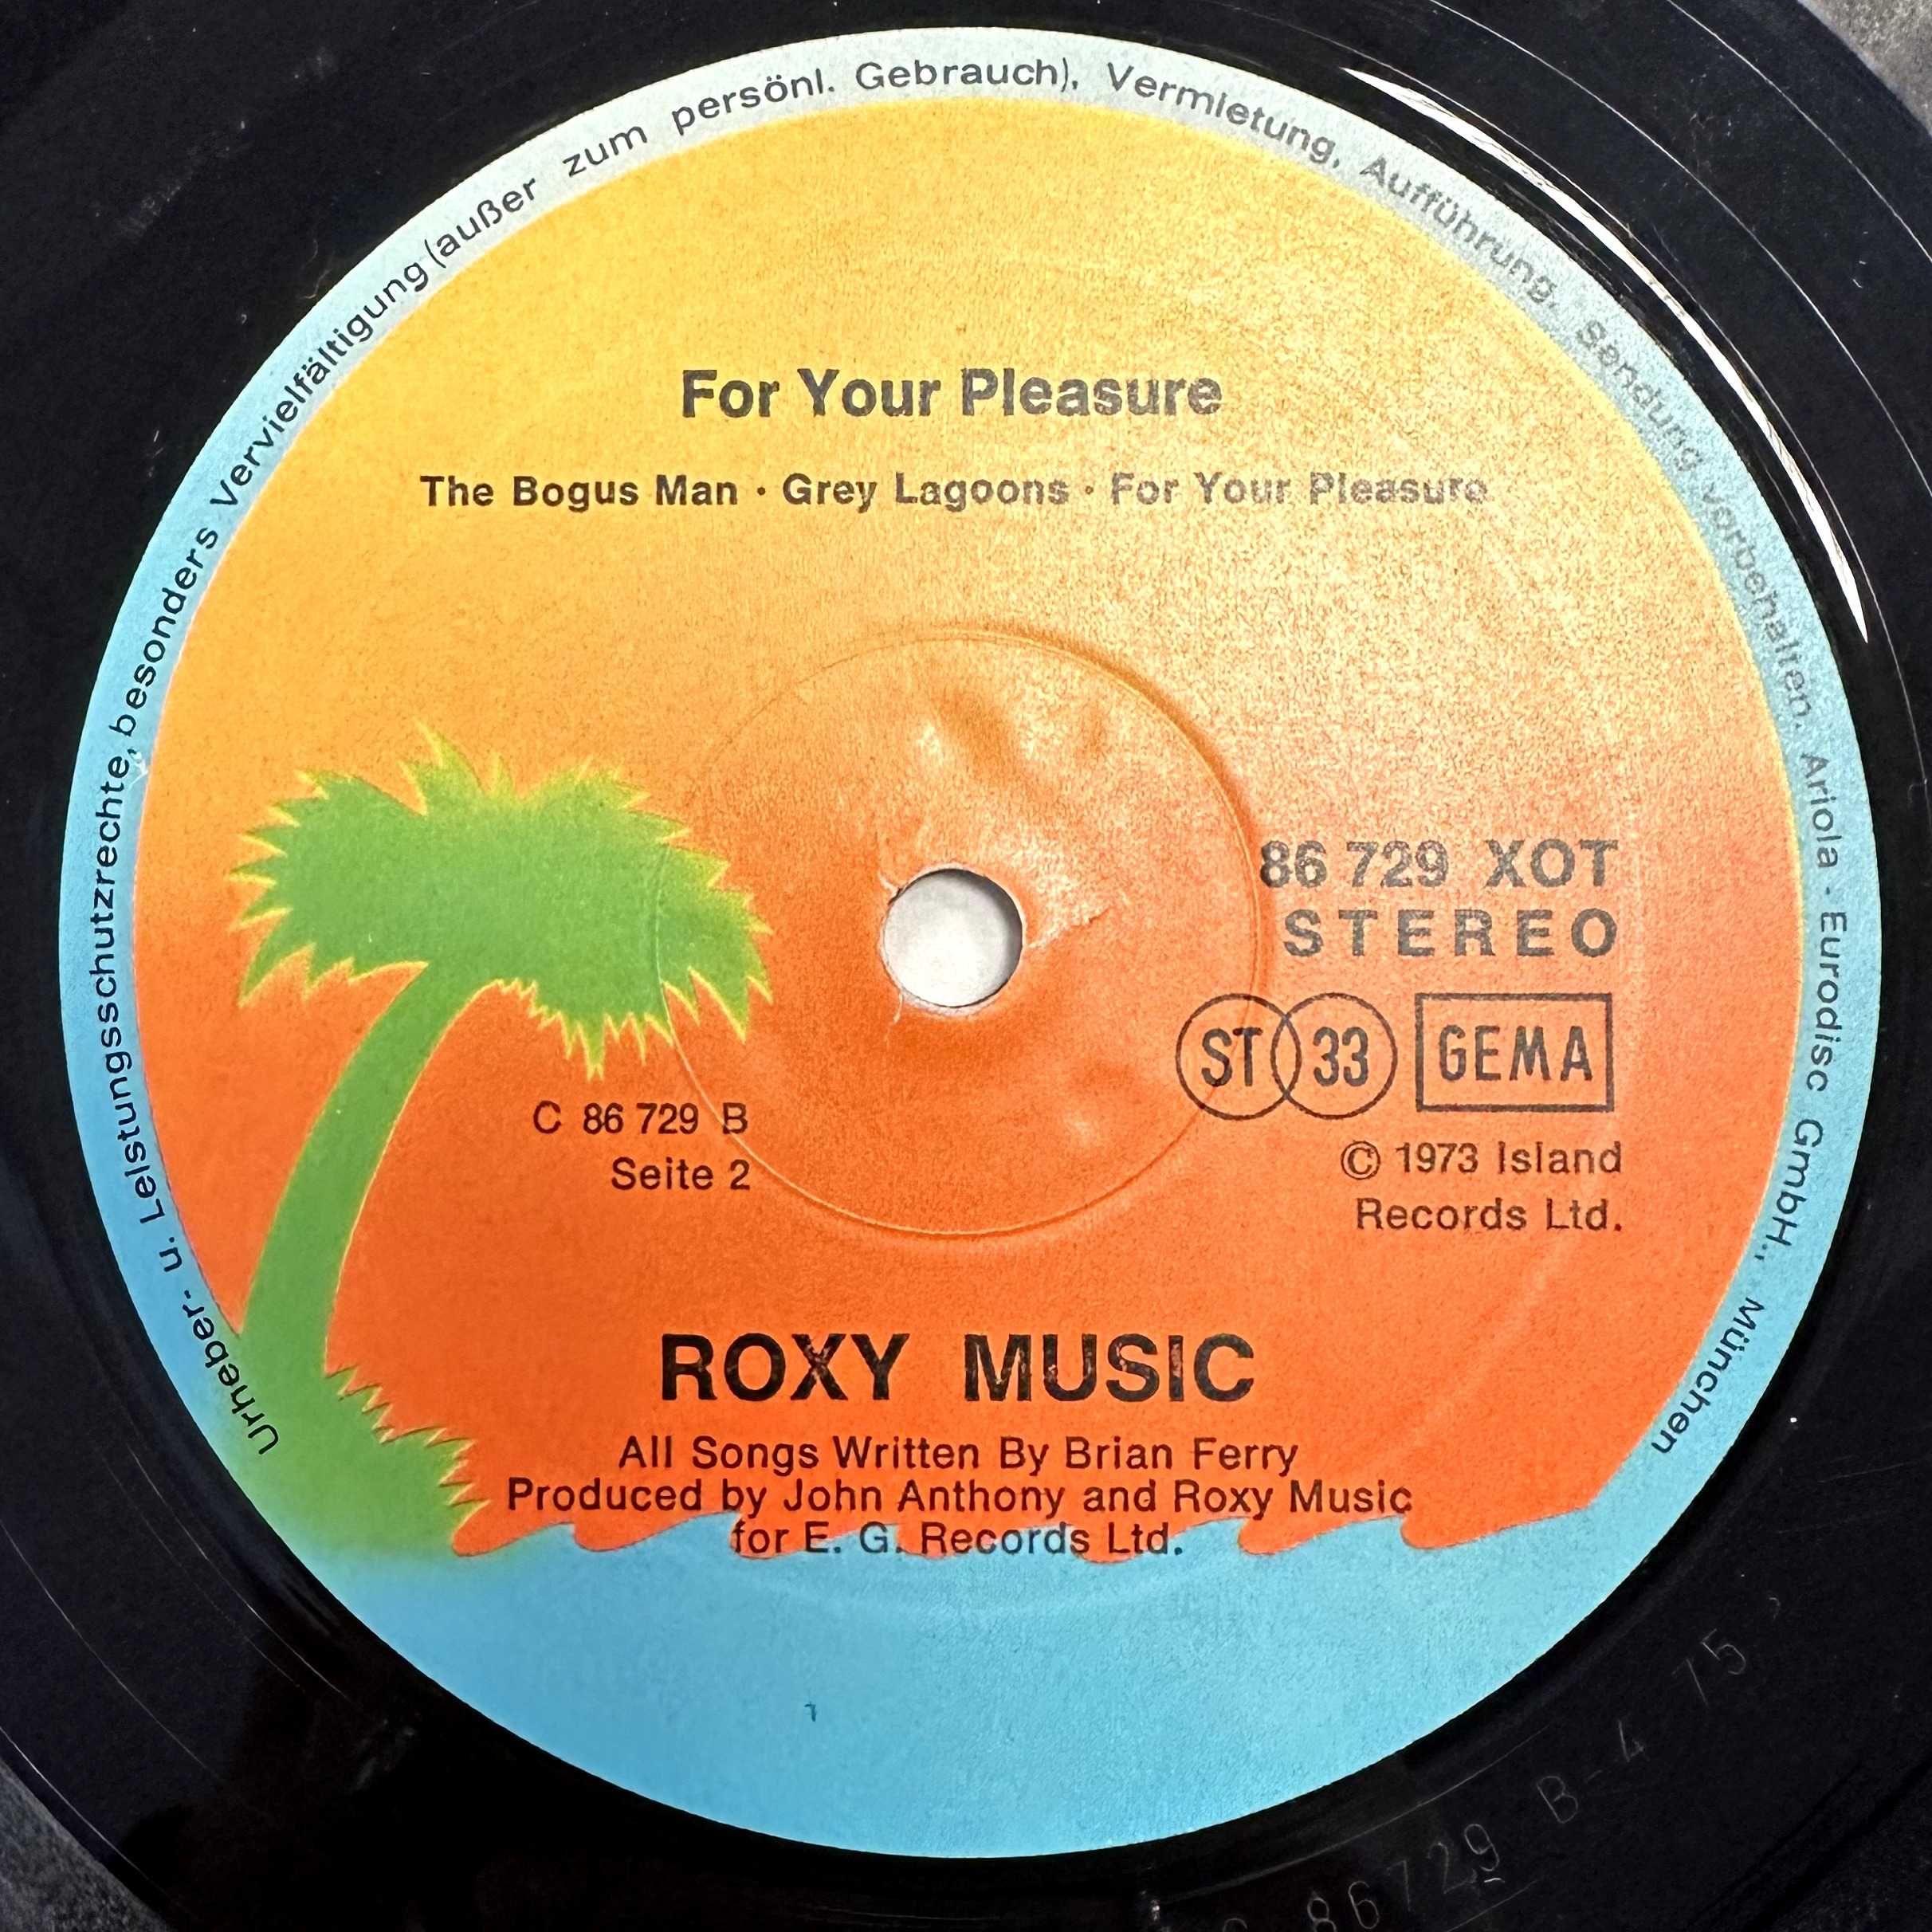 Roxy Music - For Your Pleasure (Vinyl, 1973, Germany)